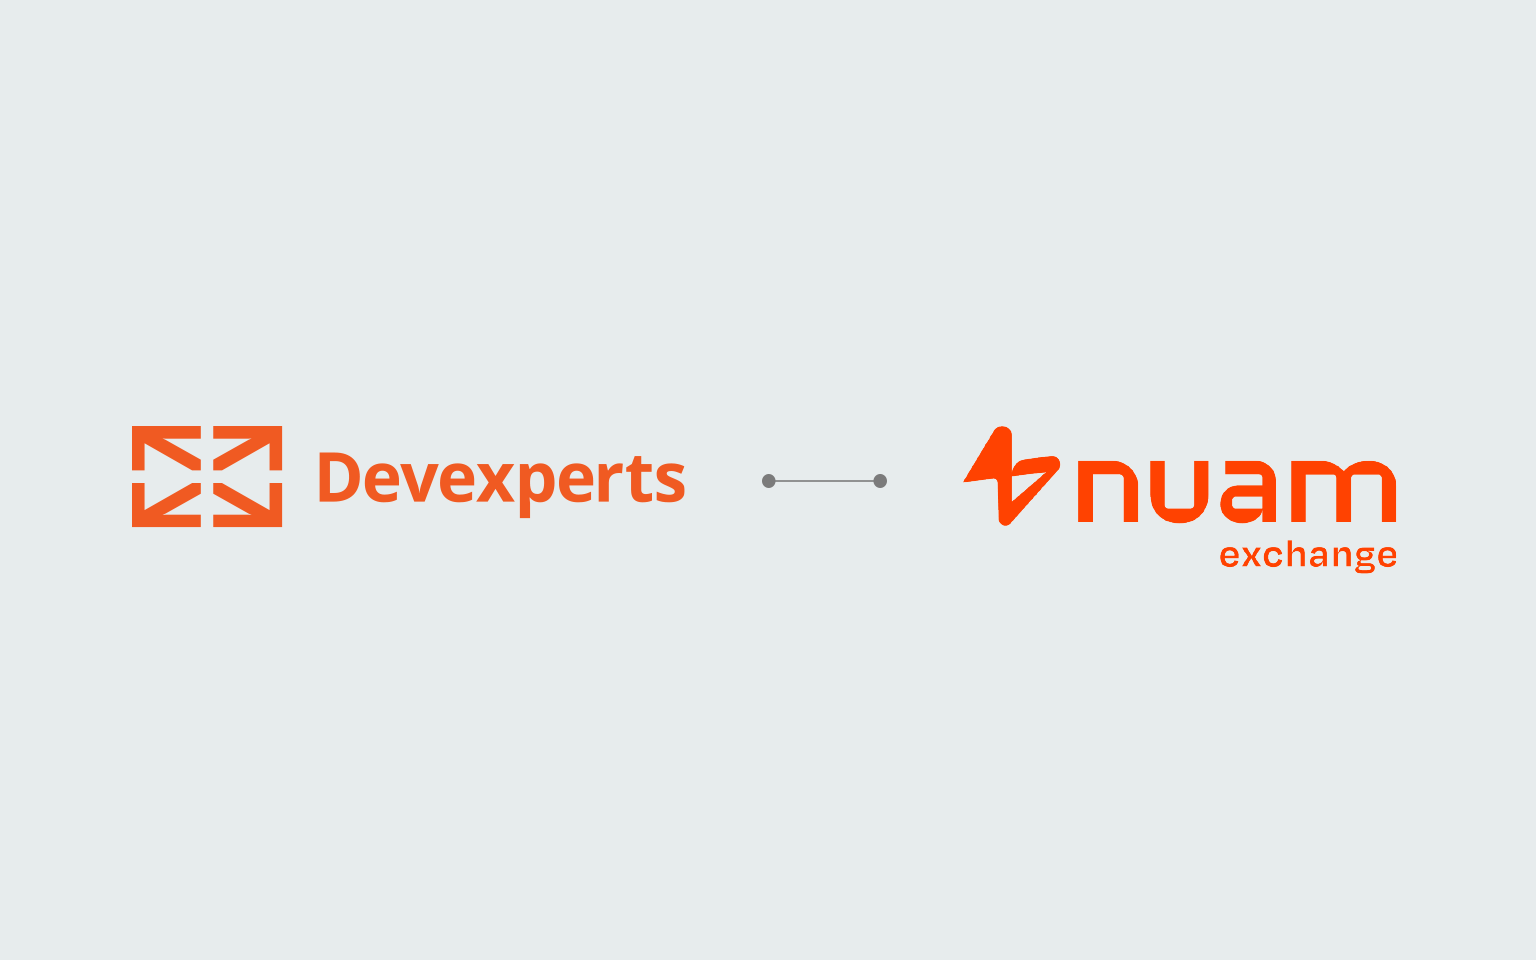 Devexperts and nuam partnership